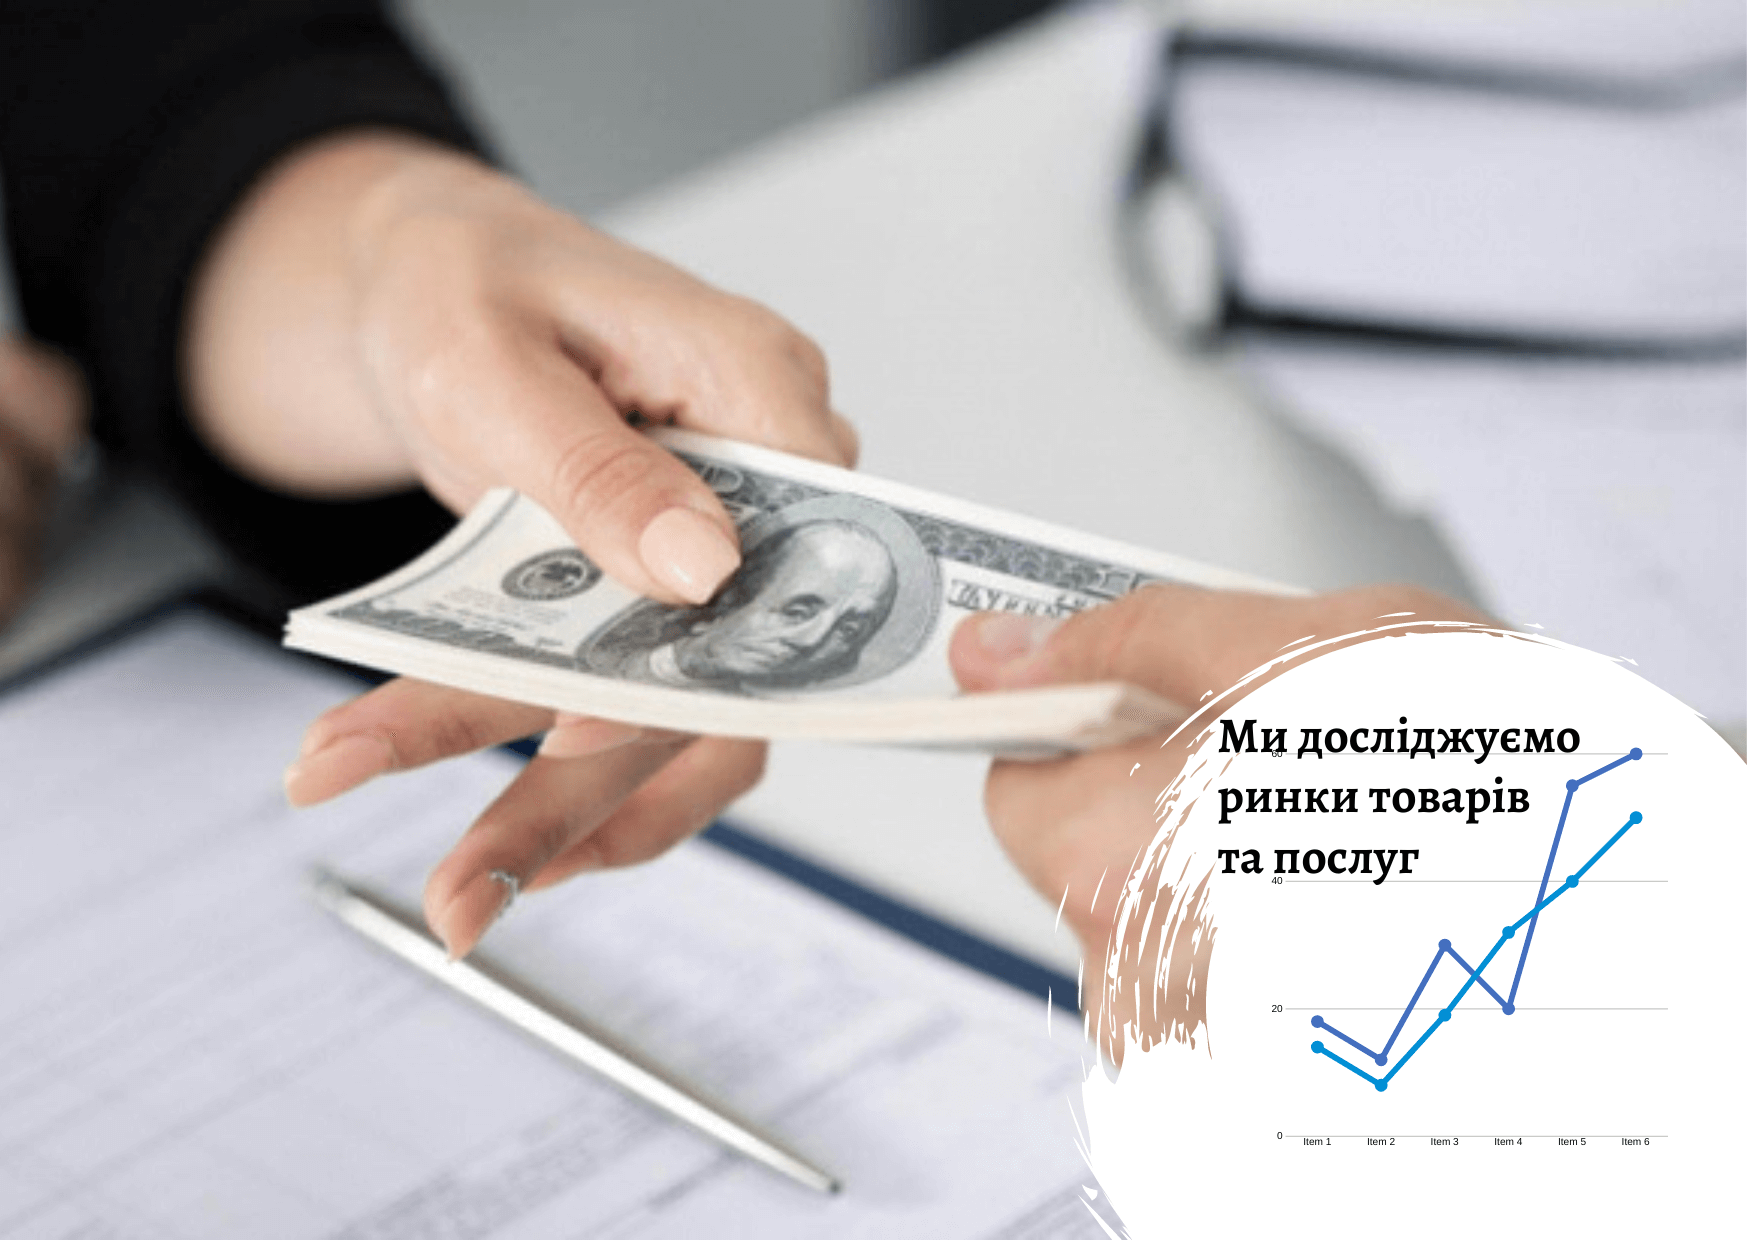 Ukrainian commodity lending and cash lending markets: trends, technologies, products